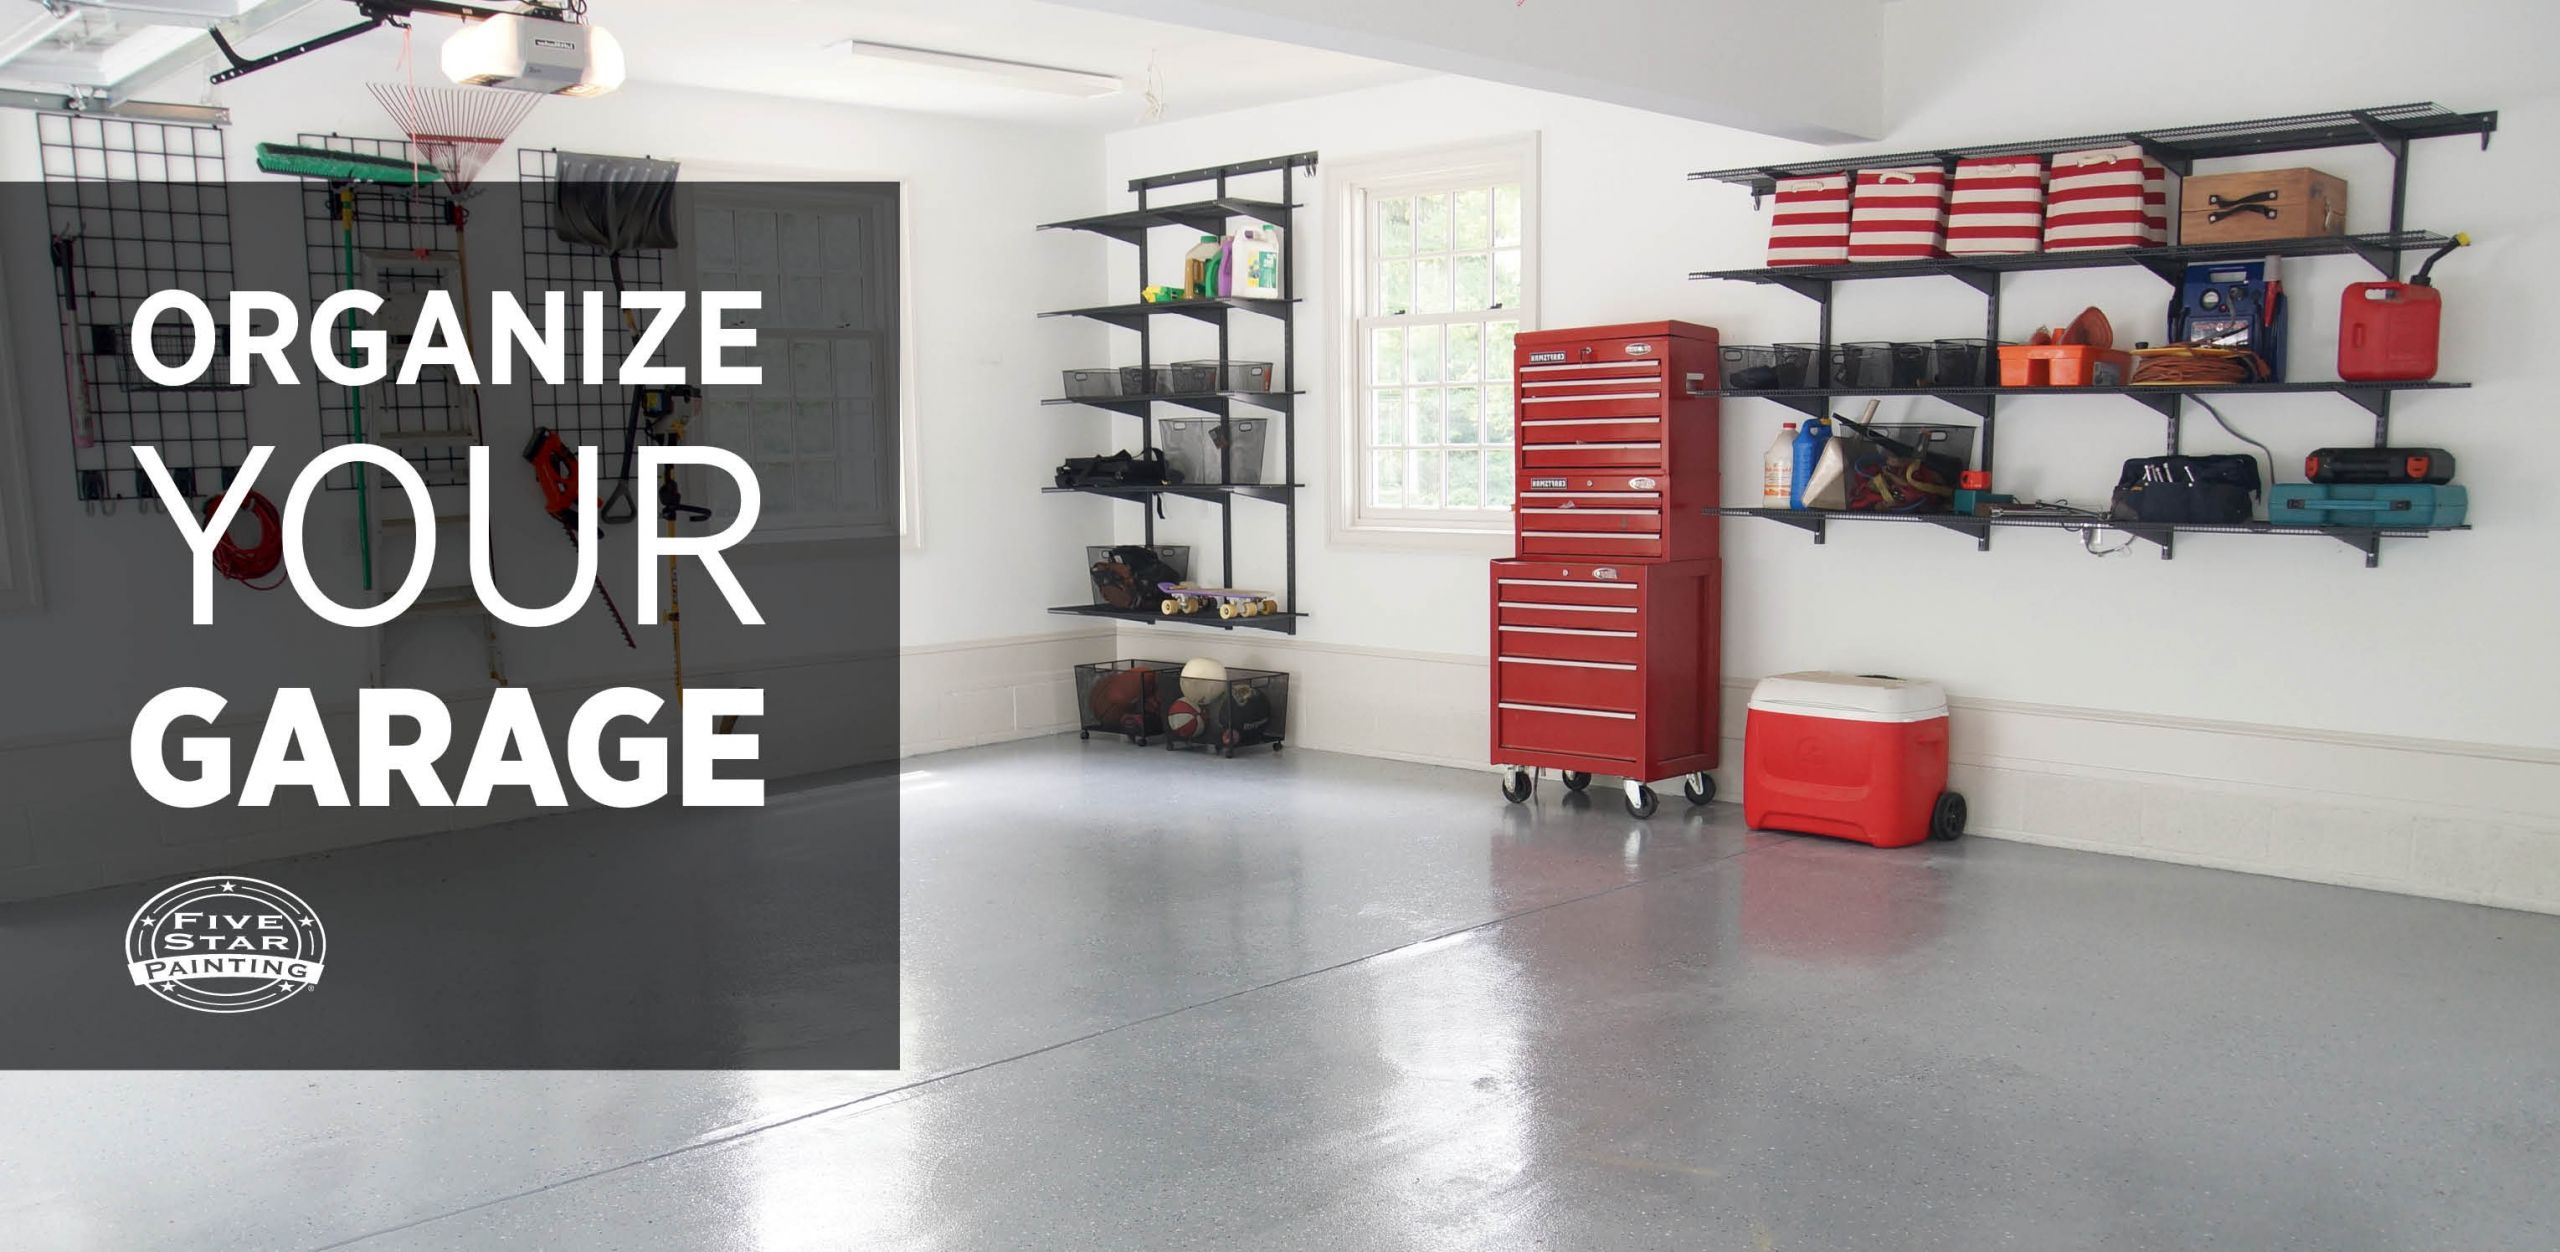 Organized Garage Images
 Organization Tips for Garages